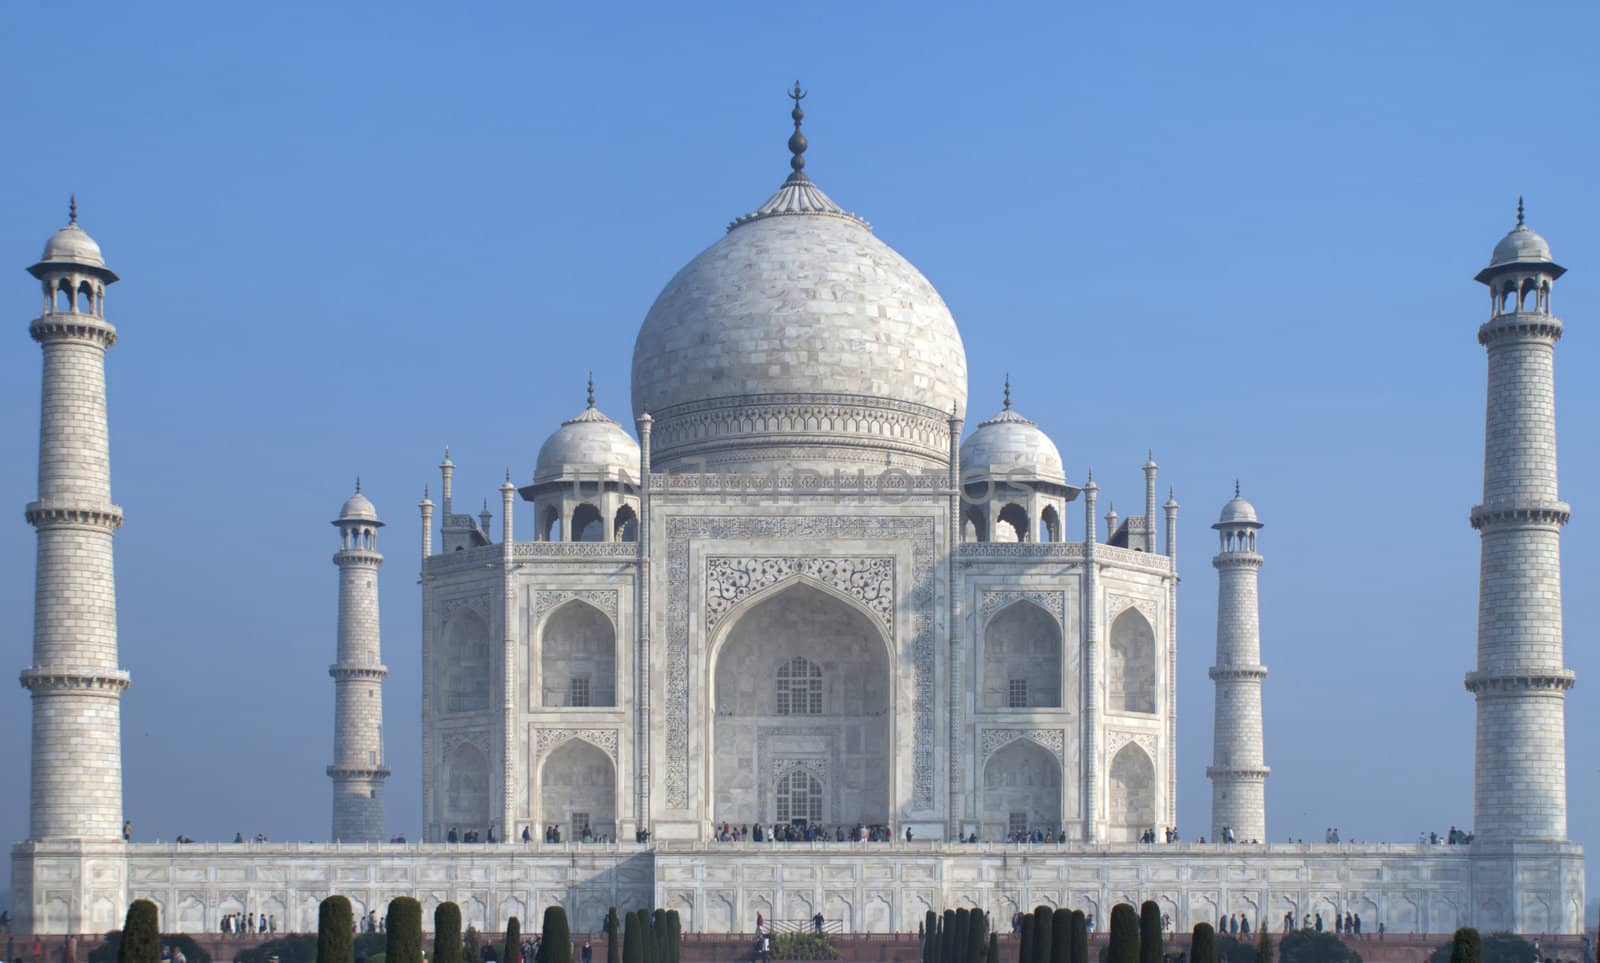 The white marble Taj Mahal mausoleum as a block against blue ski by Claudine